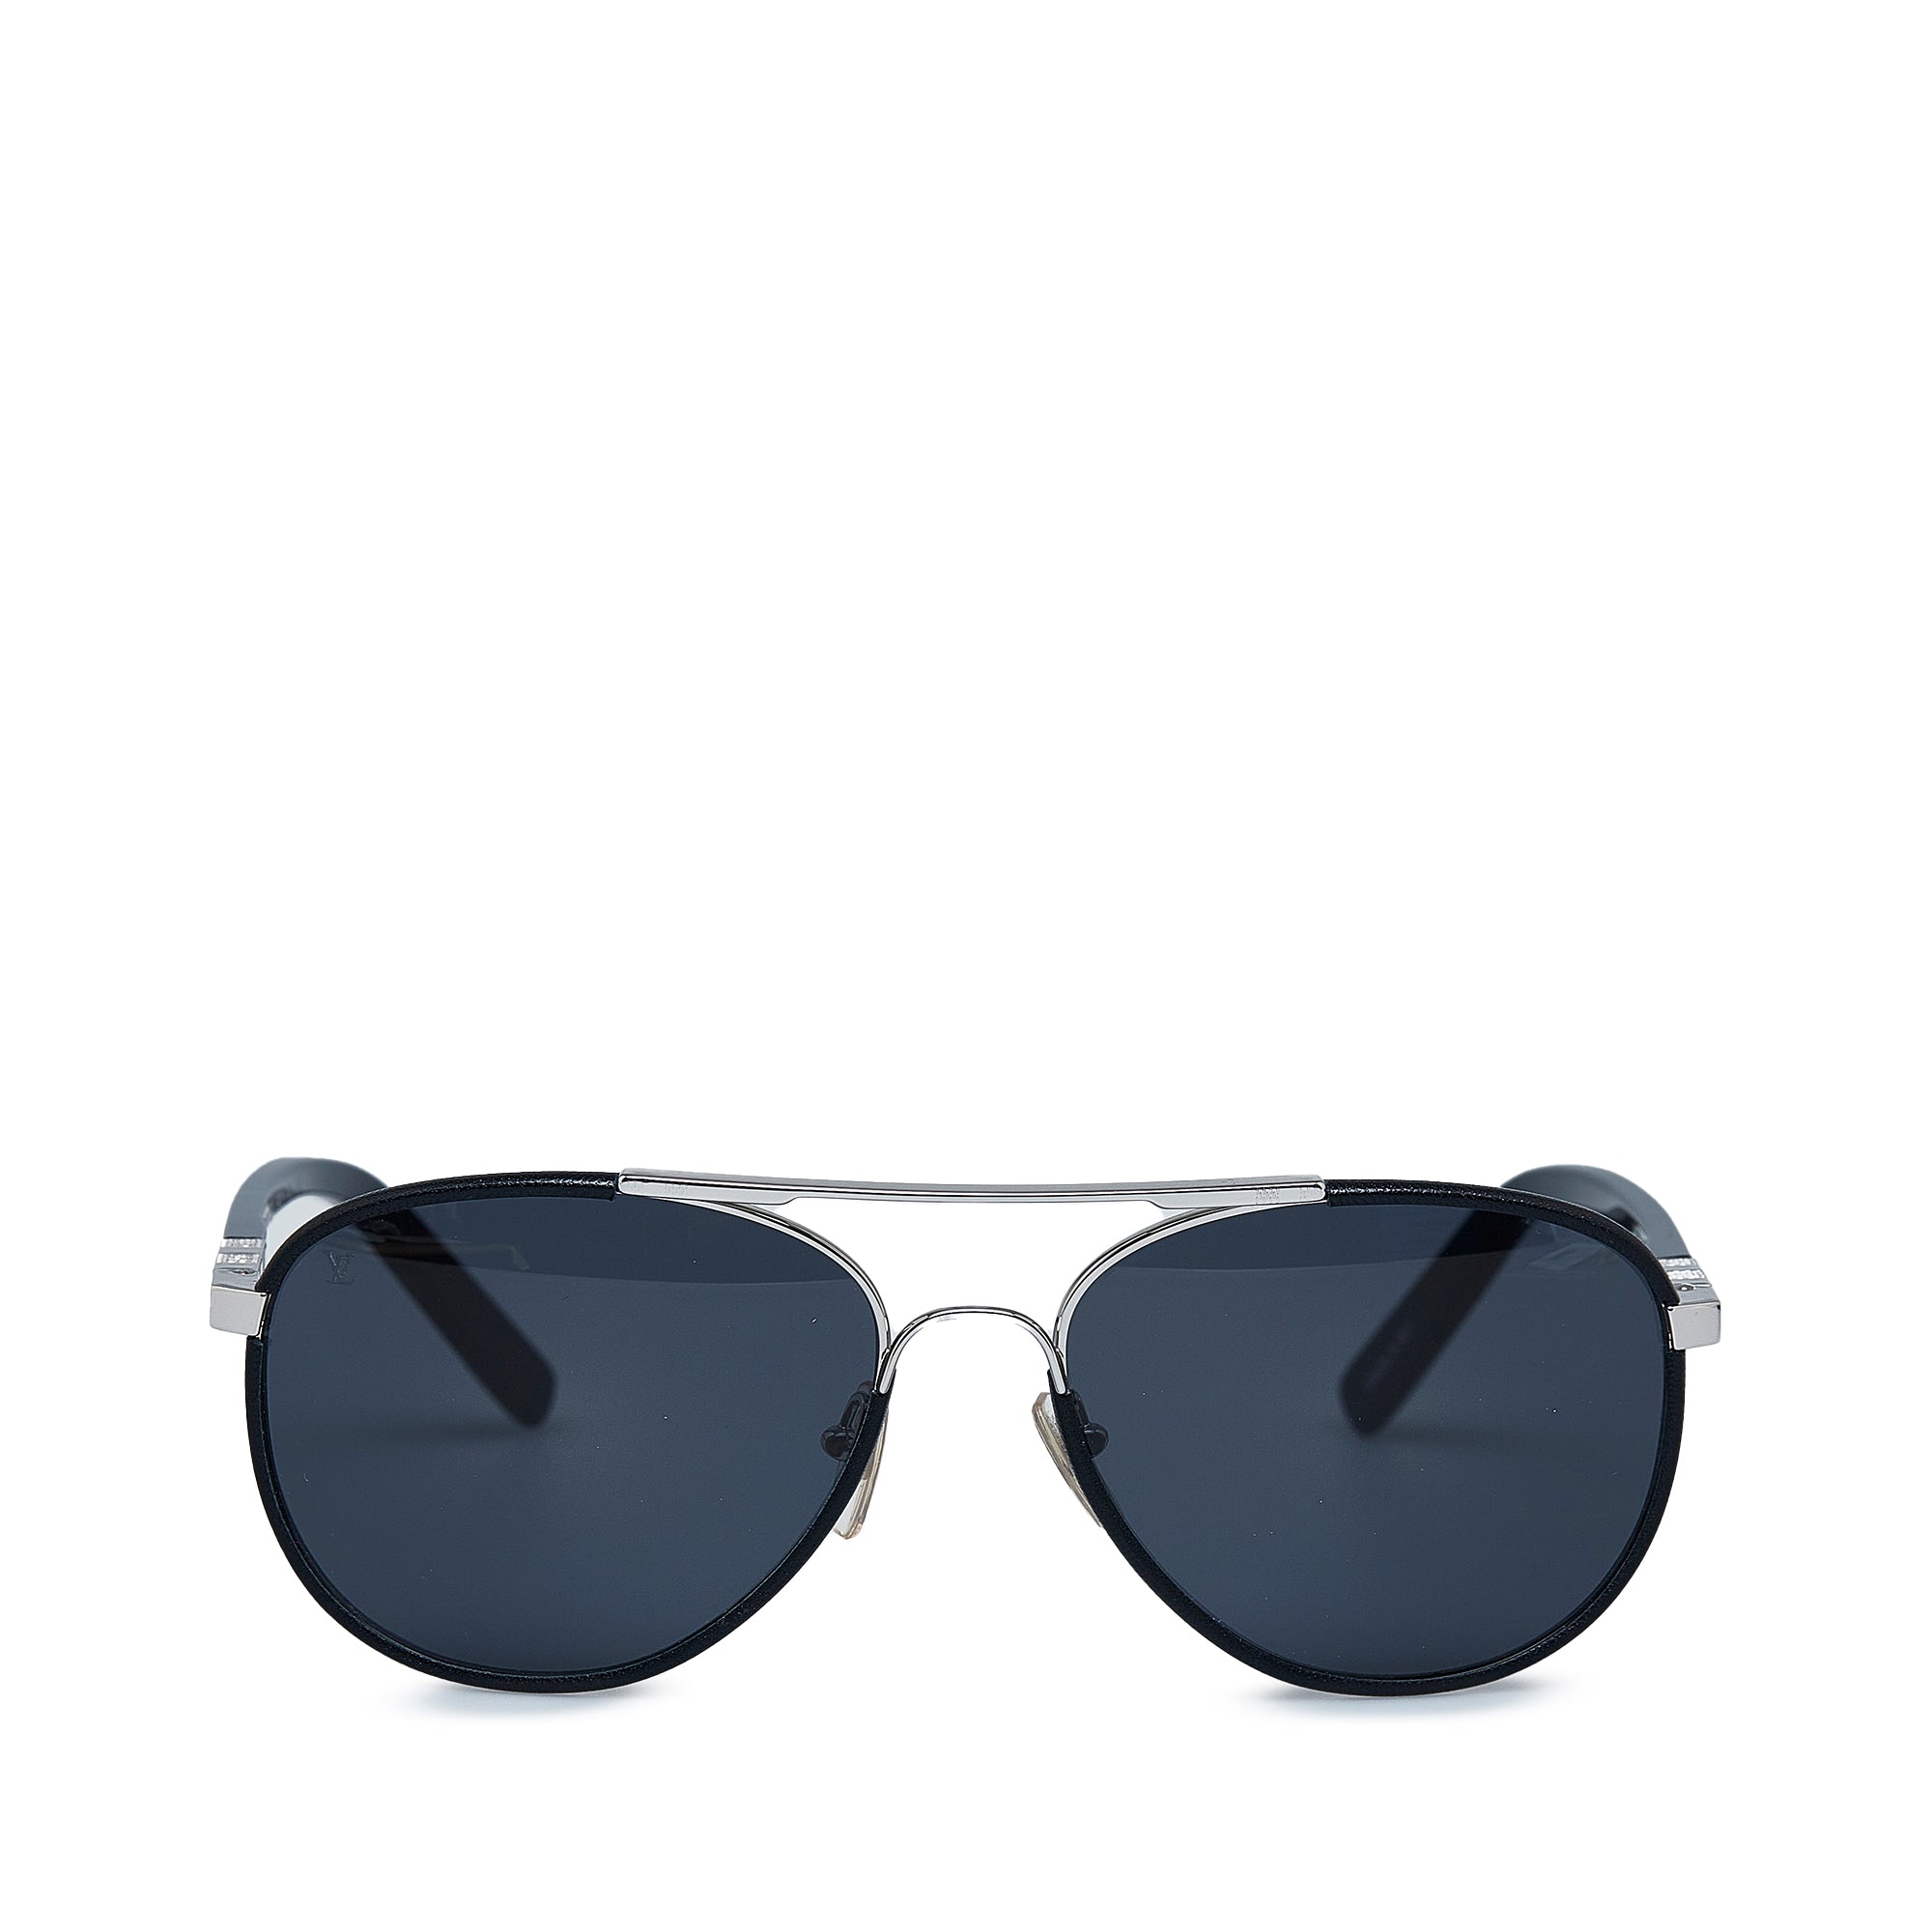 Louis Vuitton Aviator Black with Strap Men's Sunglasses